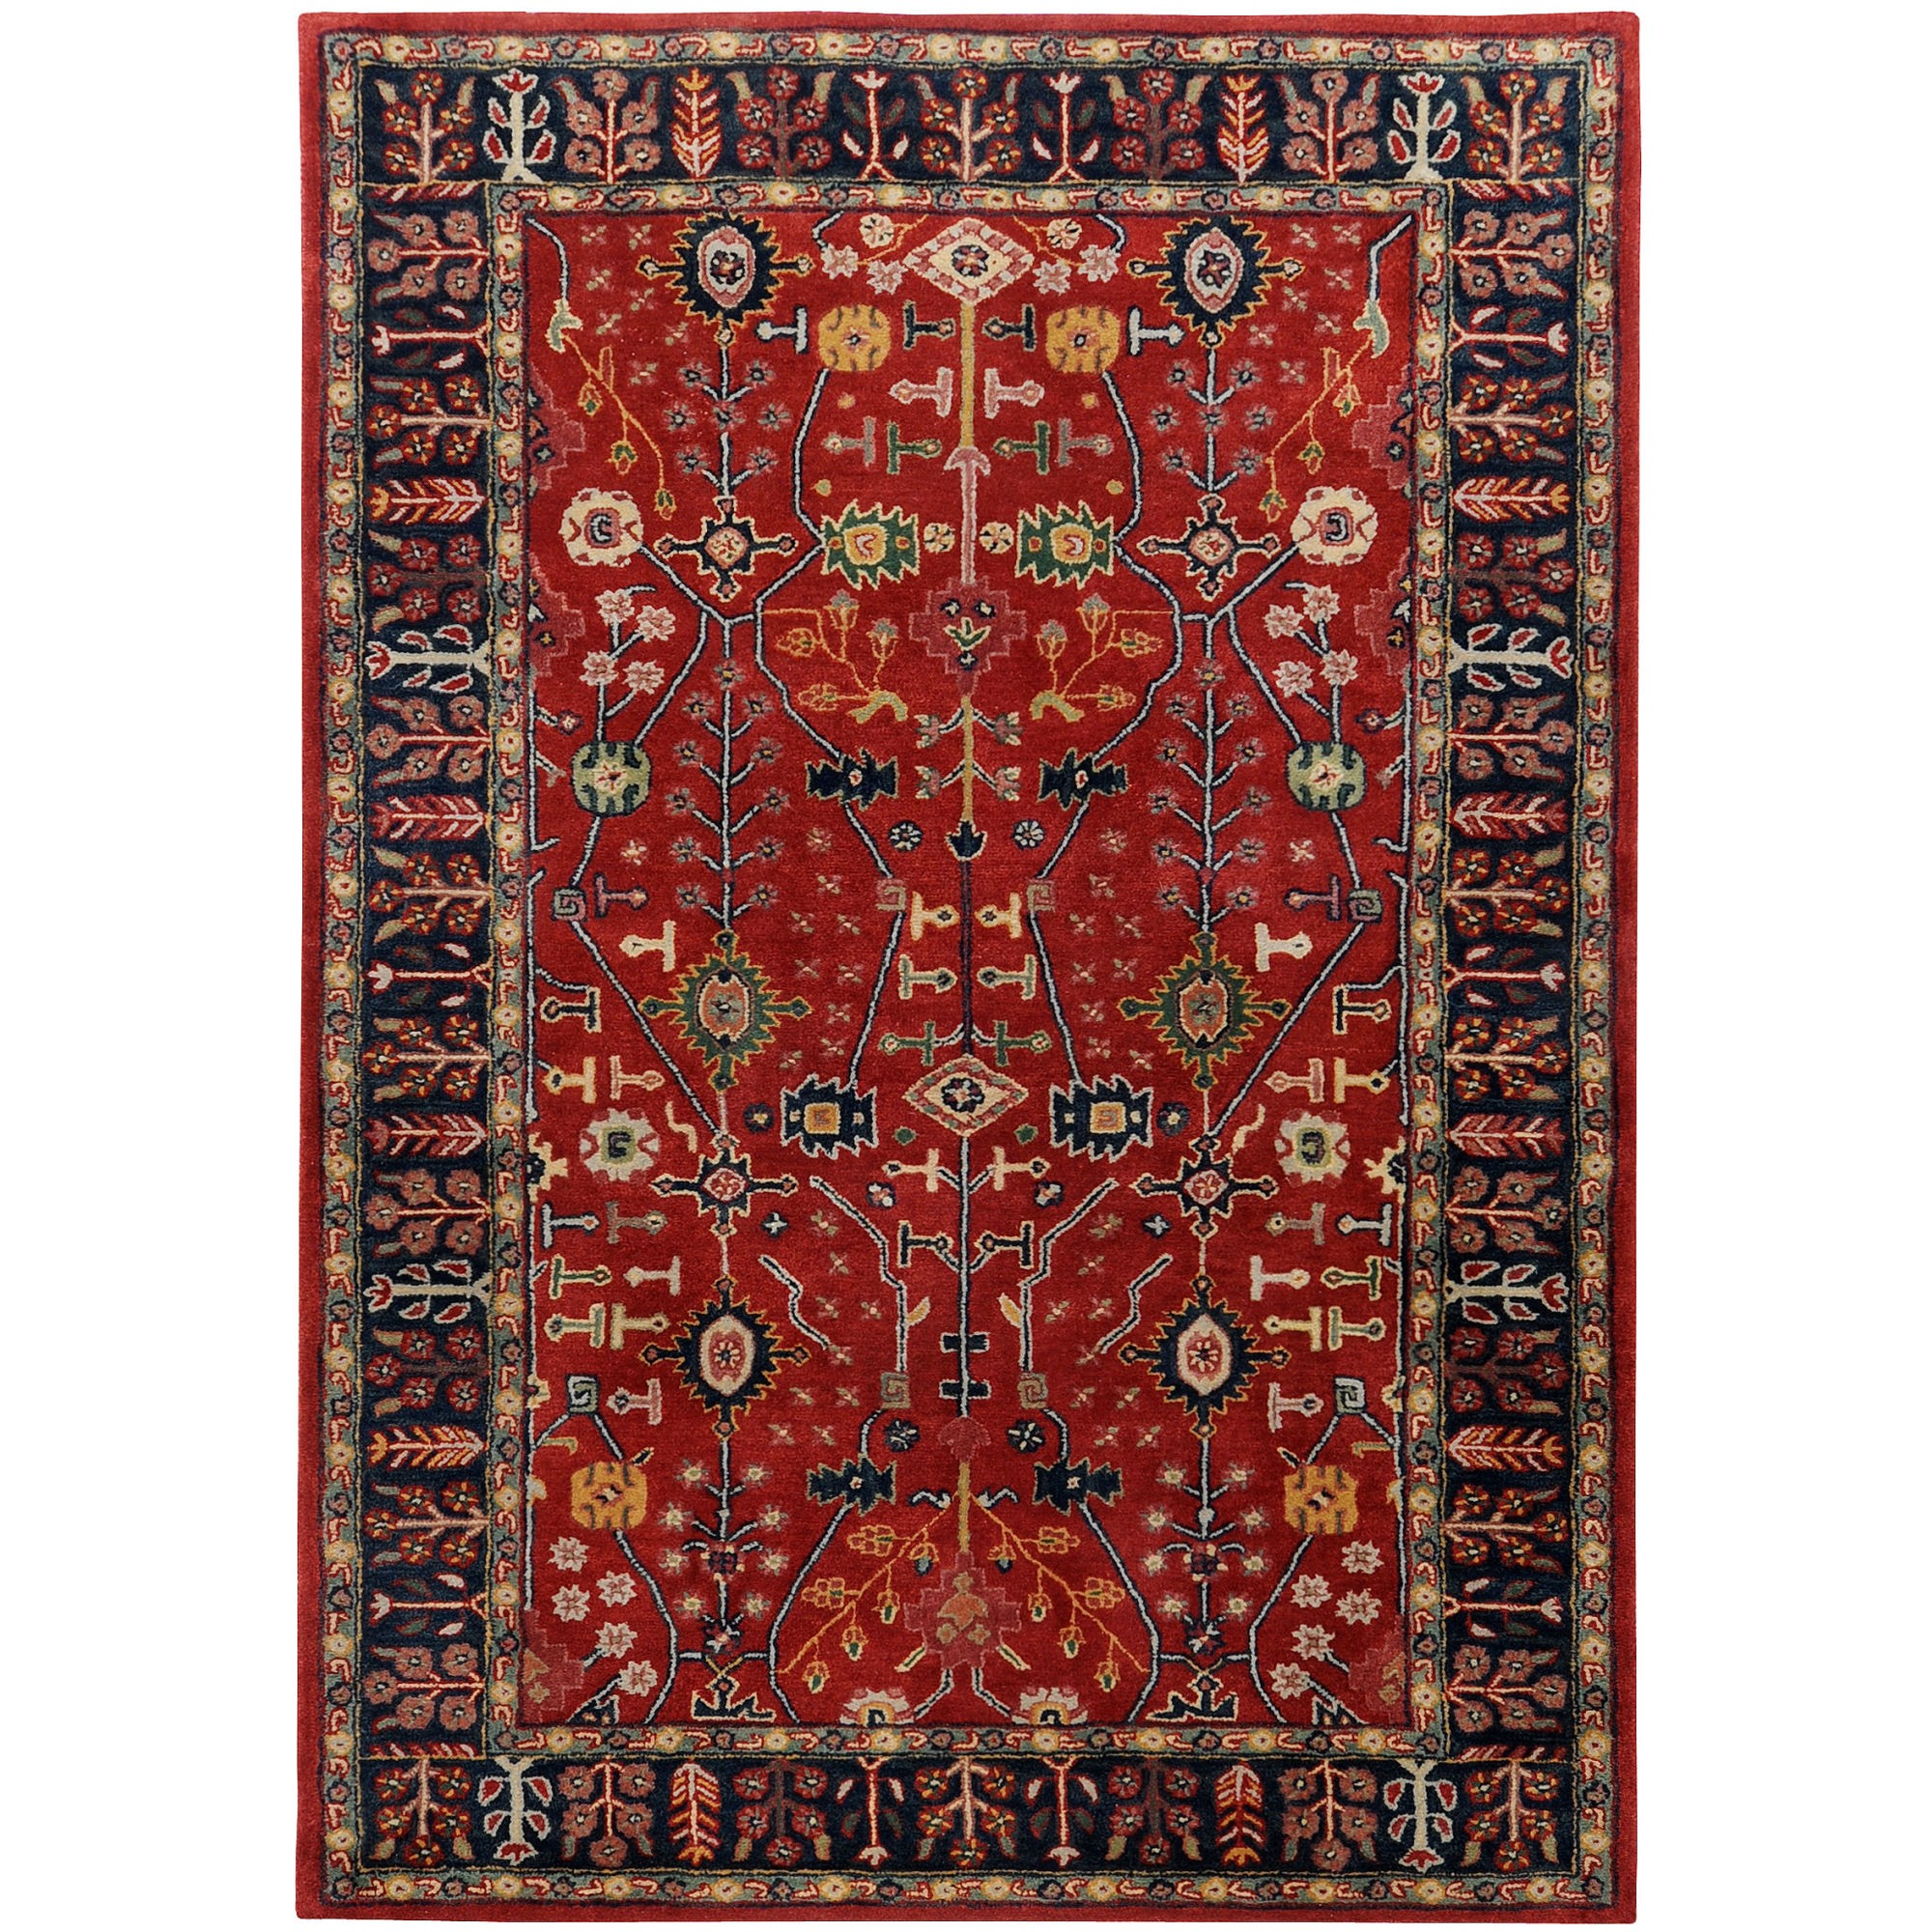 Popular Surya Ancient Treasures Red / Navy Oriental Rug - A135 red persian rug